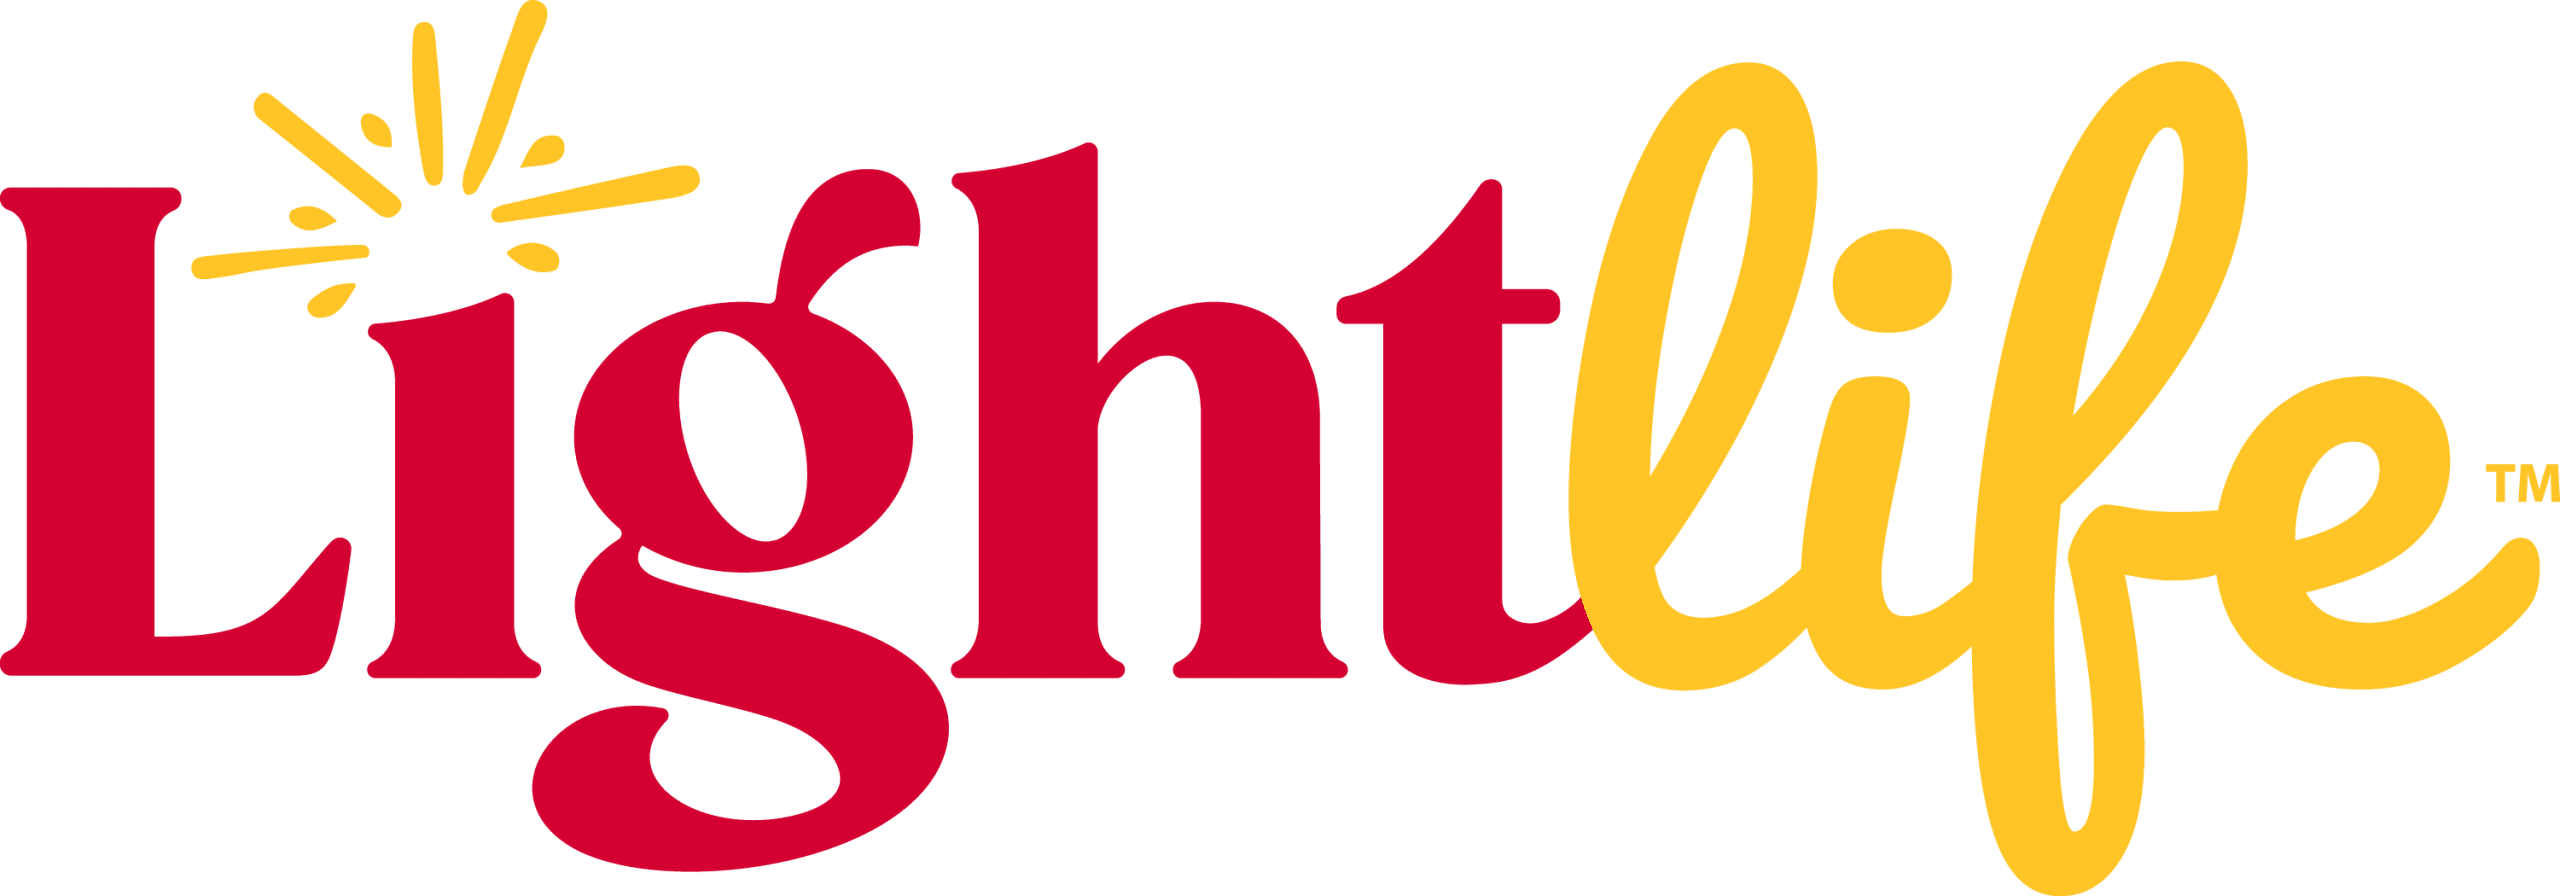 LightLife logo